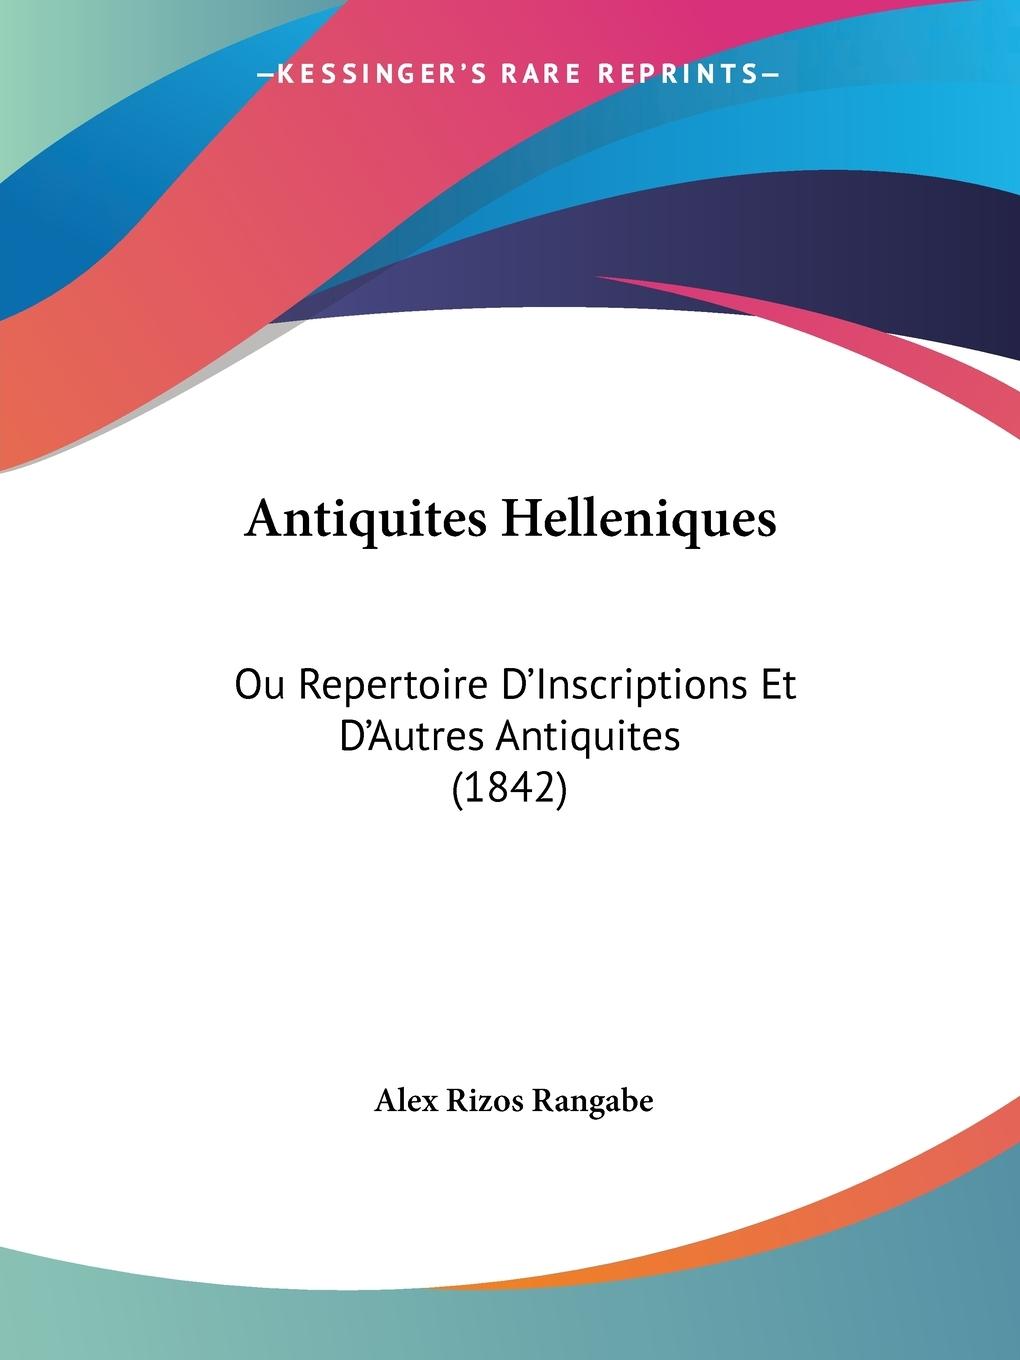 Antiquites Helleniques - Rangabe, Alex Rizos